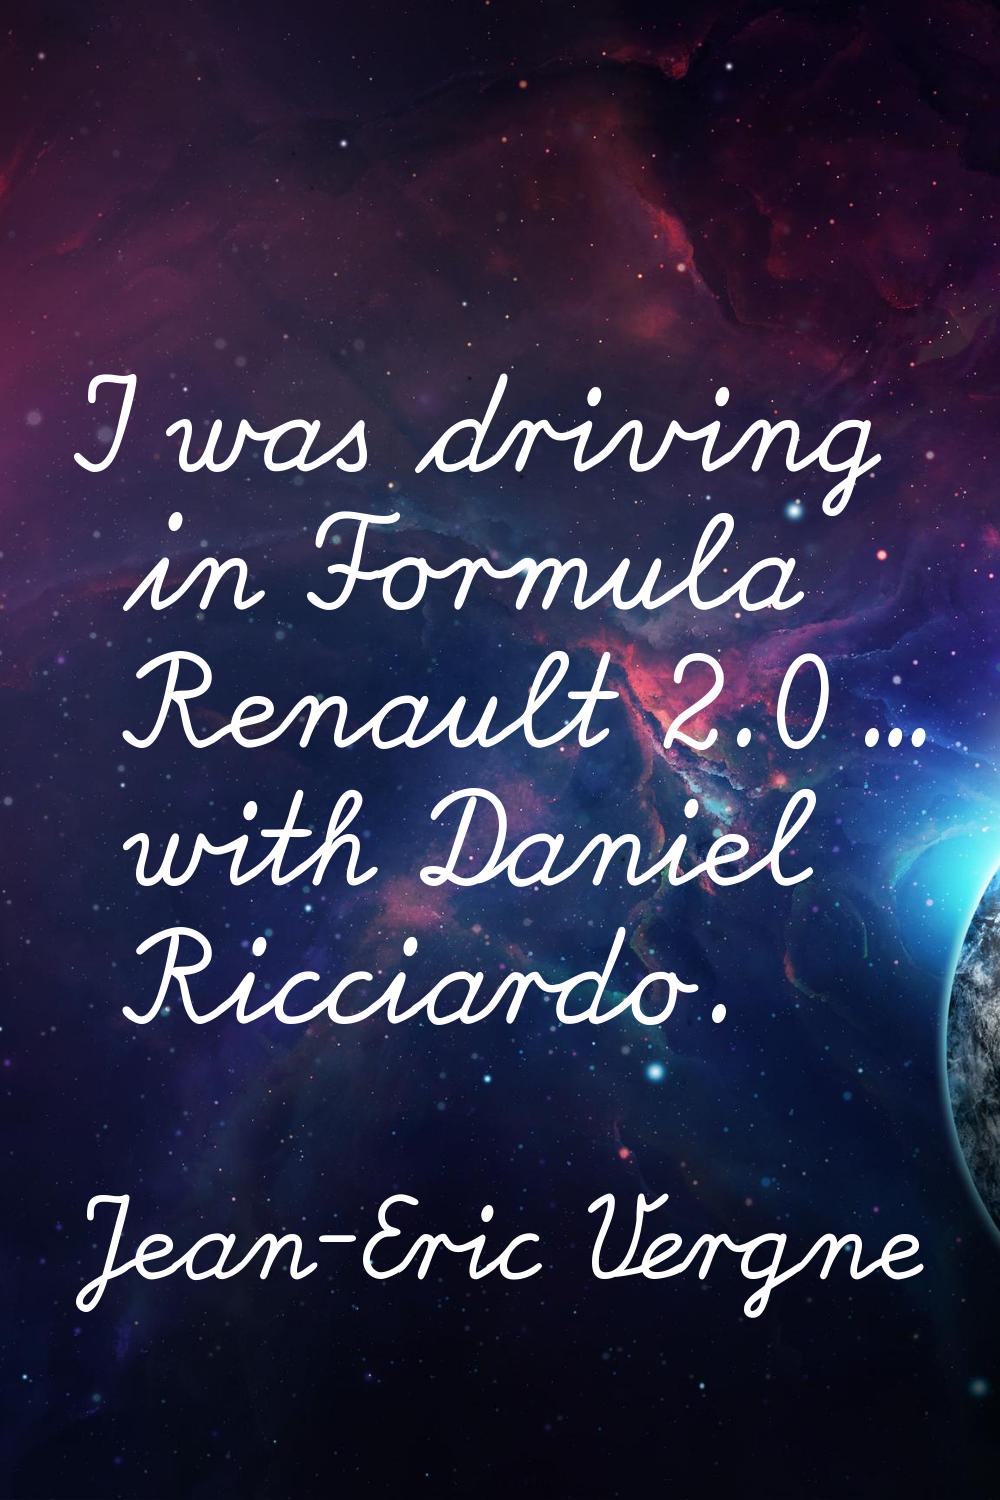 I was driving in Formula Renault 2.0... with Daniel Ricciardo.